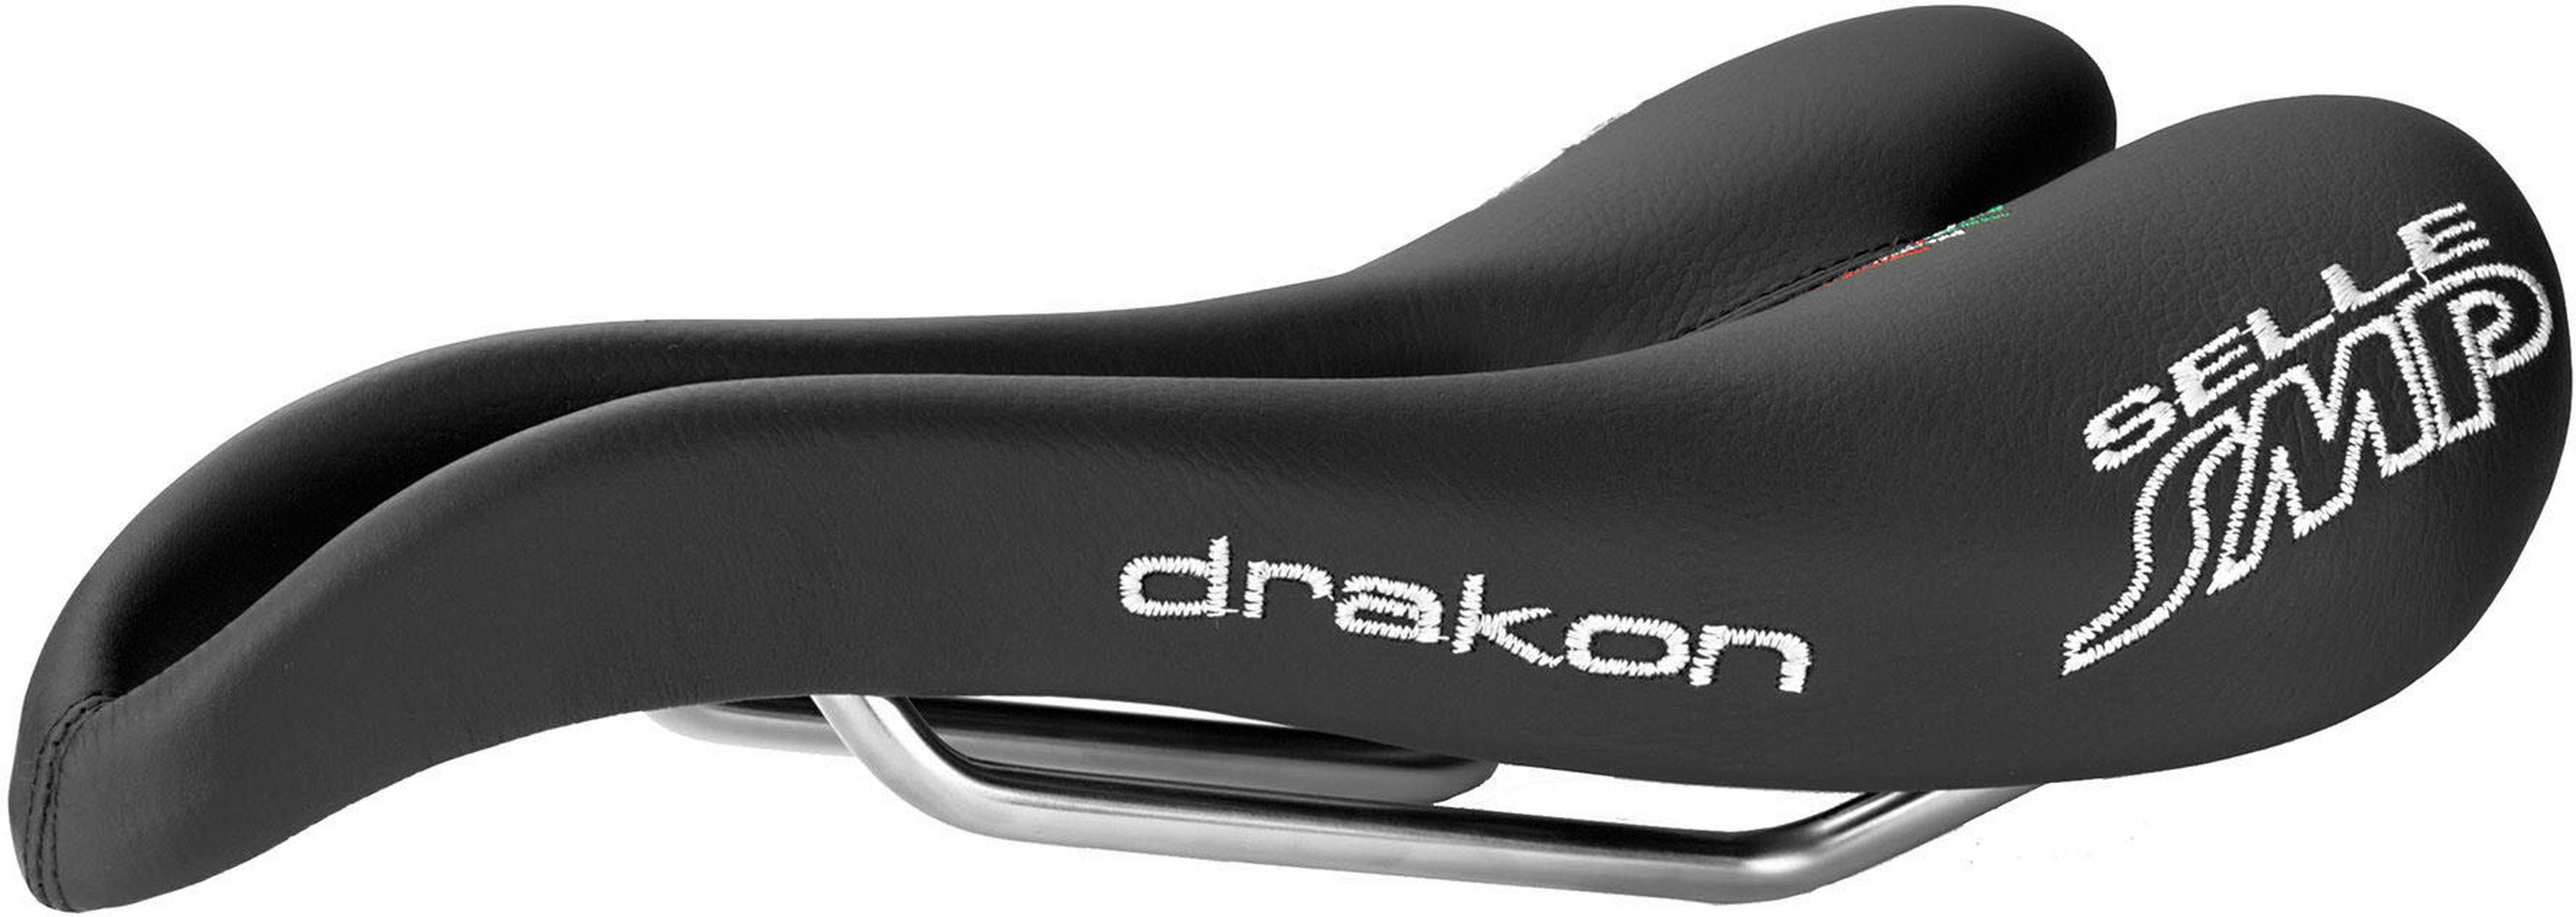 Selle SMP Drakon Bike Saddle | Chain Reaction